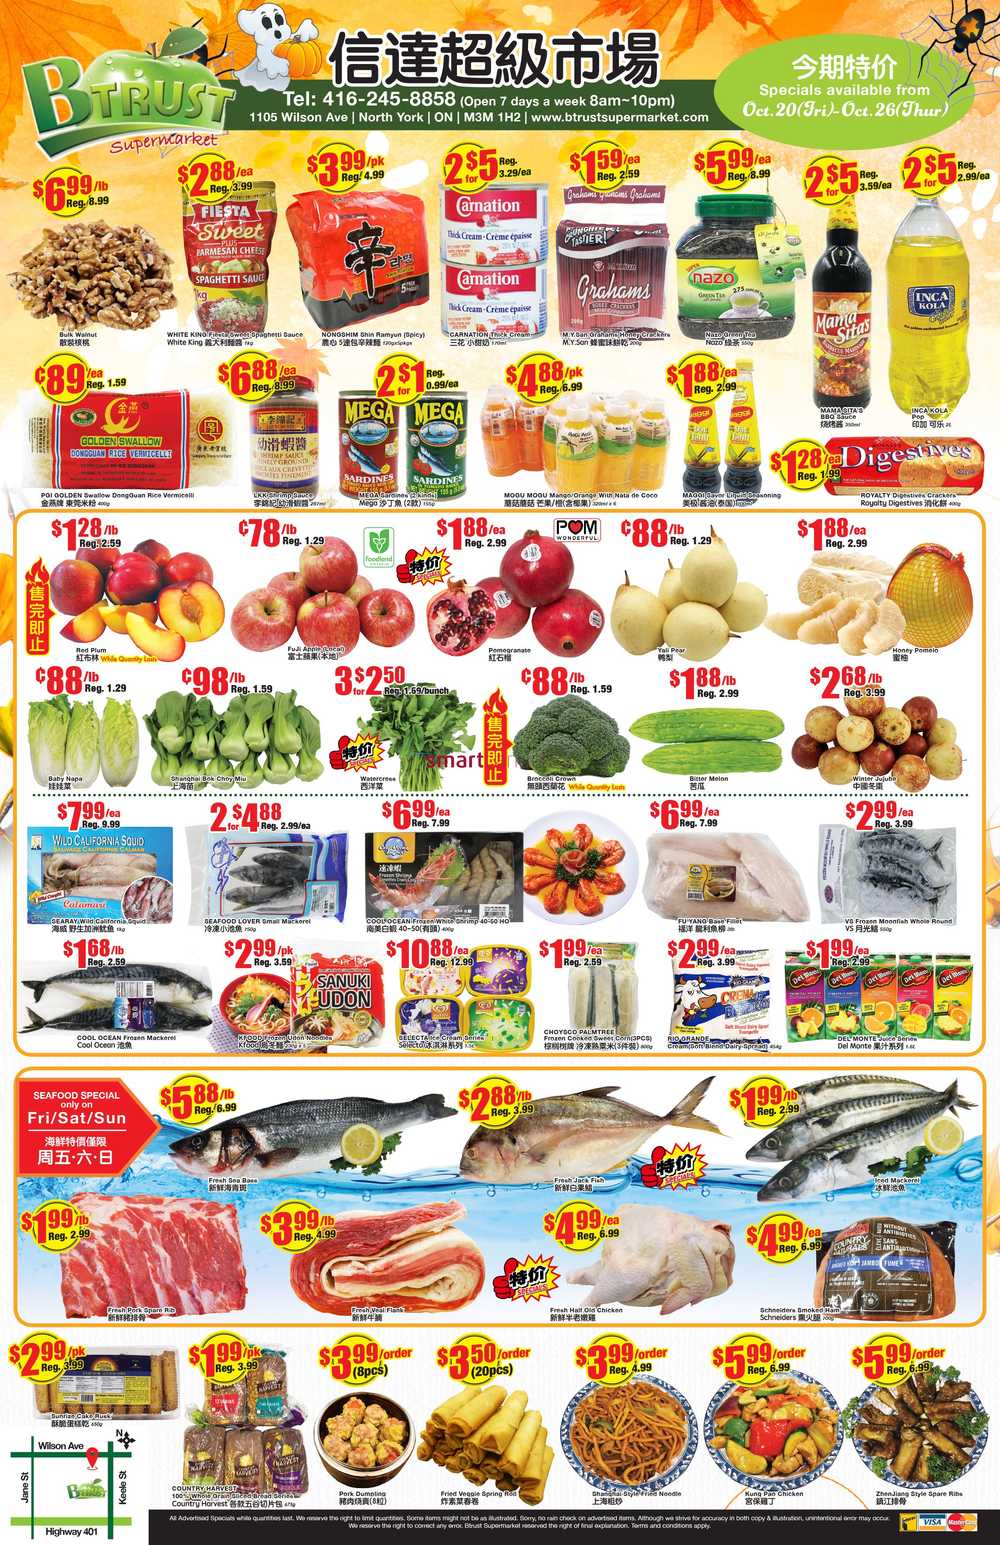 Btrust Supermarket (North York) Flyer October 20 to 26